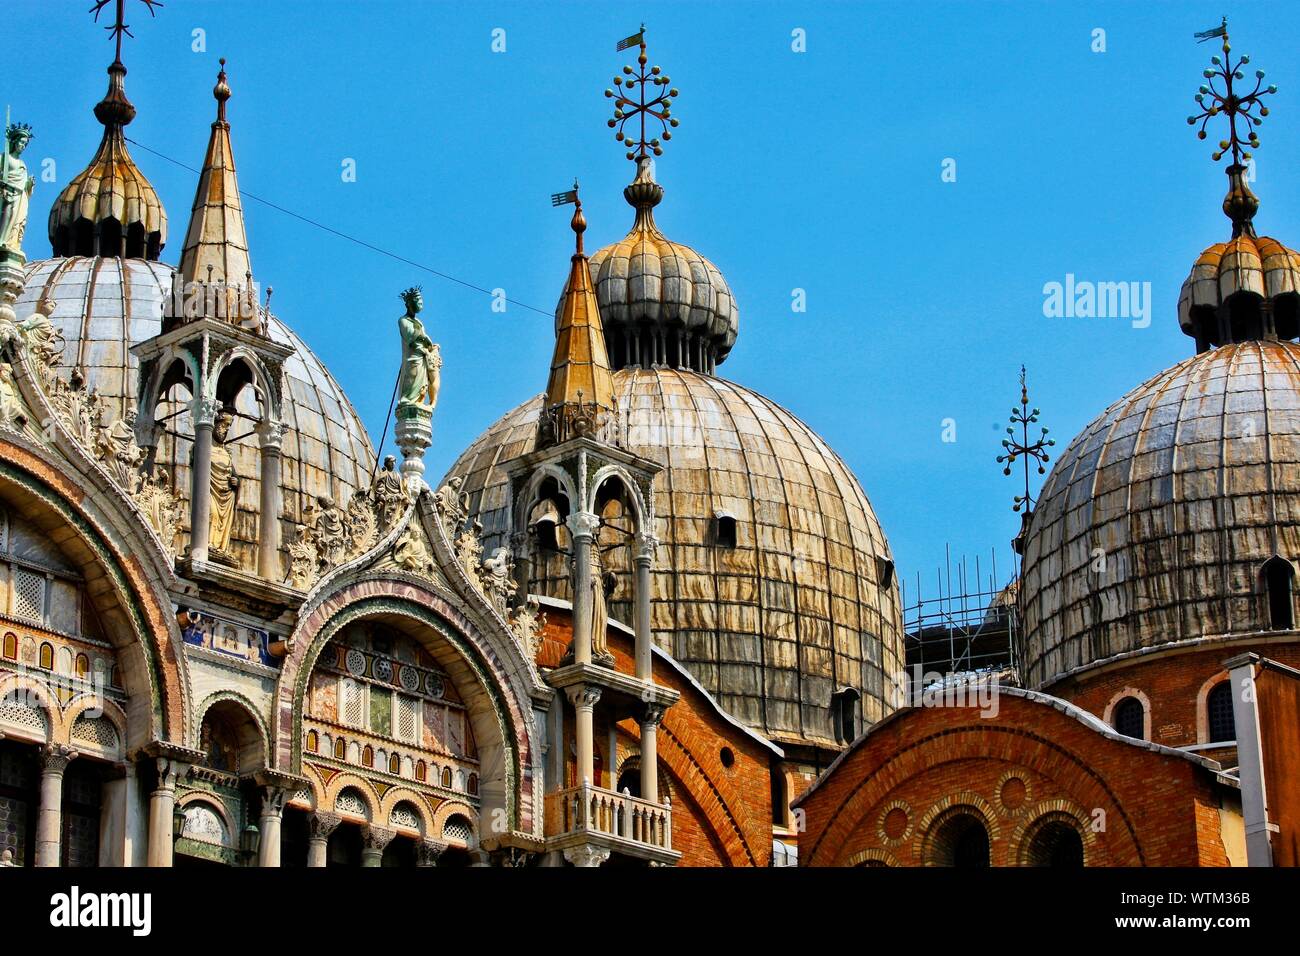 St. Mark's Basilica in Venice, Italy Stock Photo